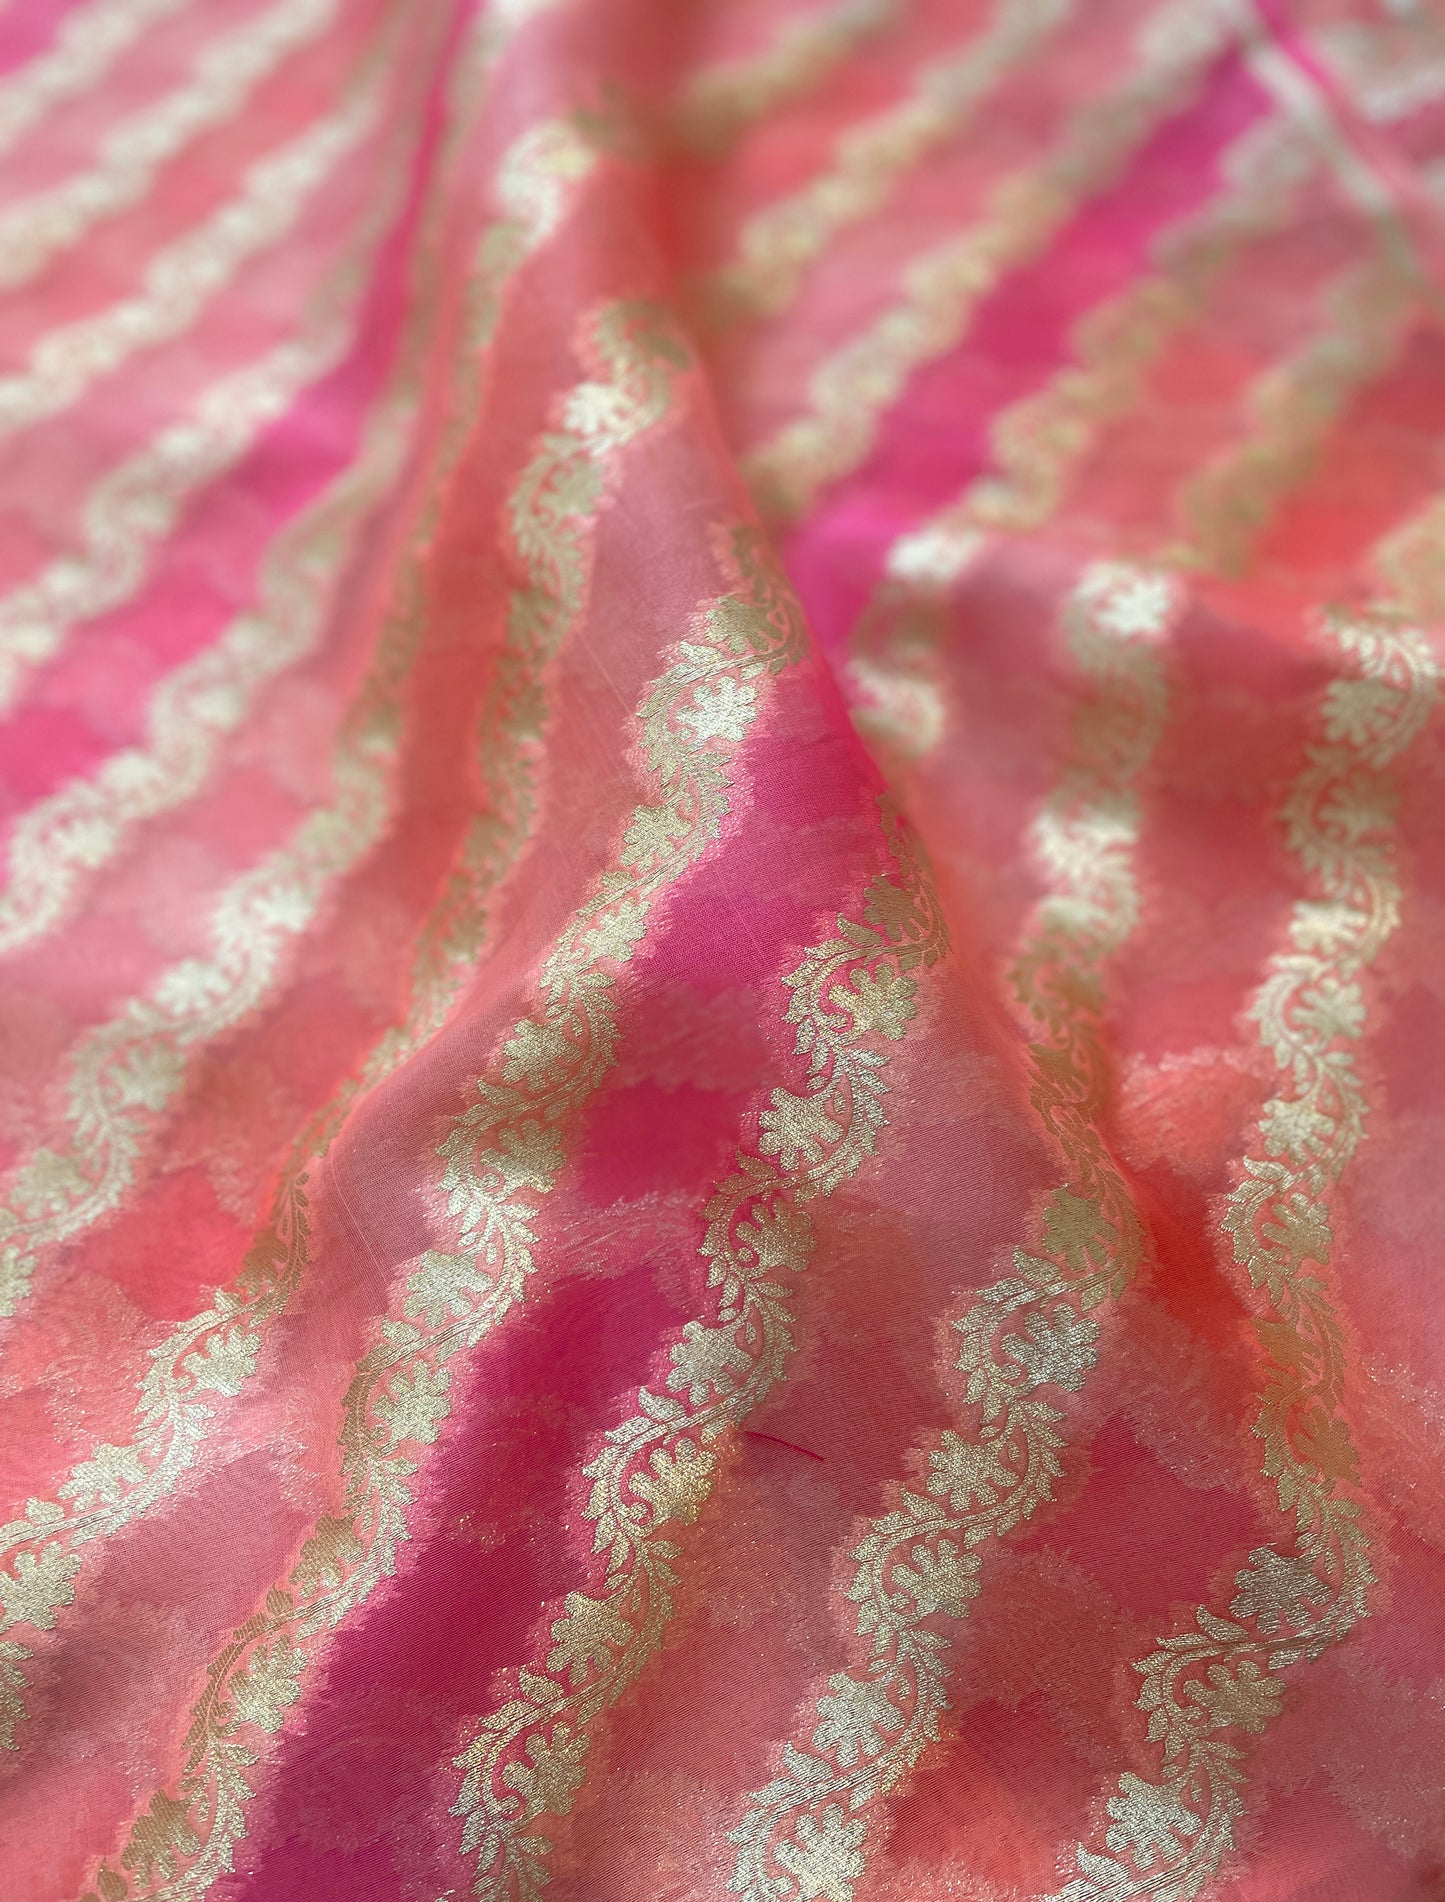 Kora Rangkat Shades Of Pink Fabric